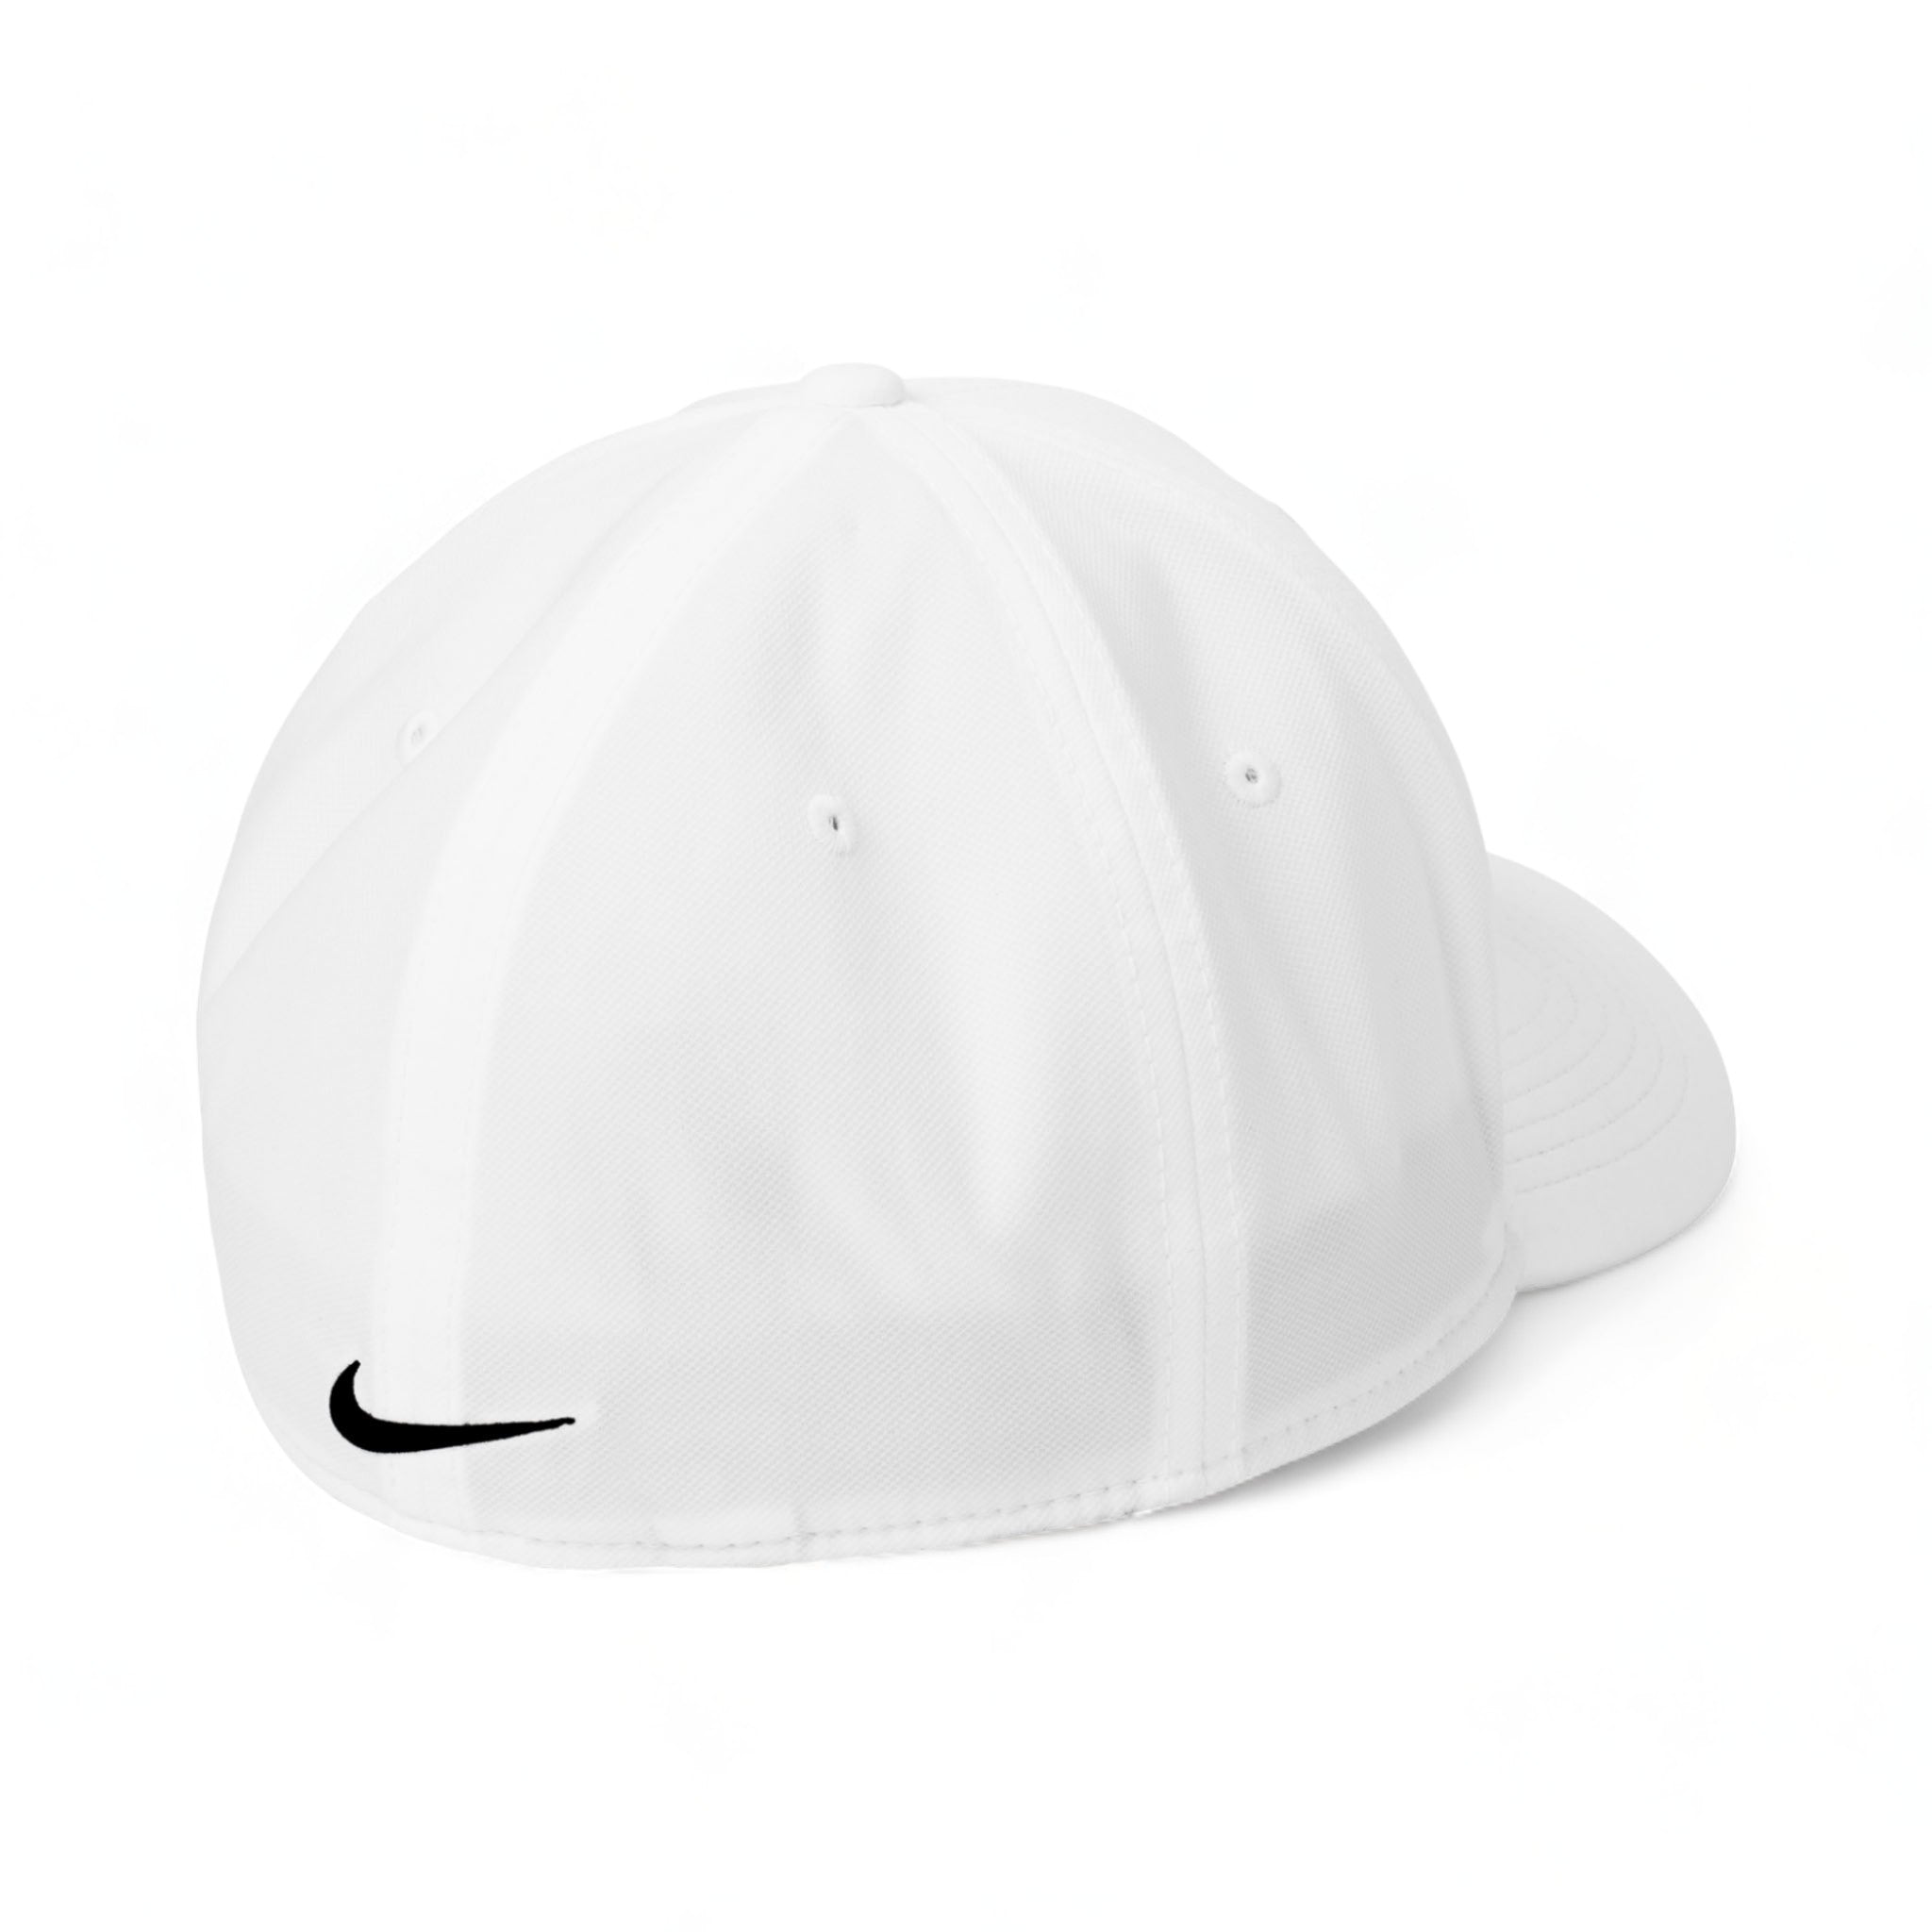 Back view of Nike NKAA1860 custom hat in white and black